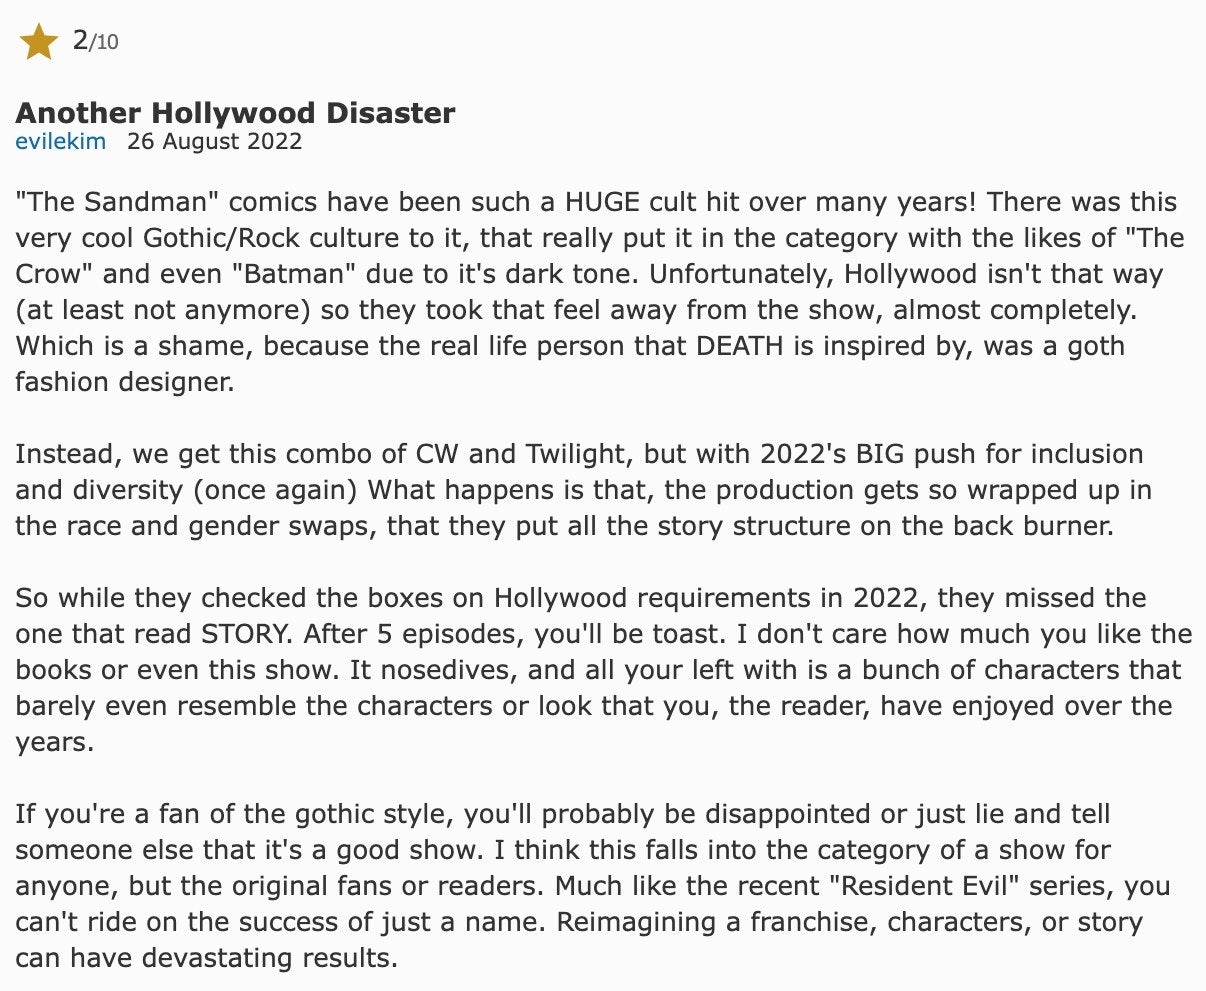 2/10 user review for The Sandman on IMDB